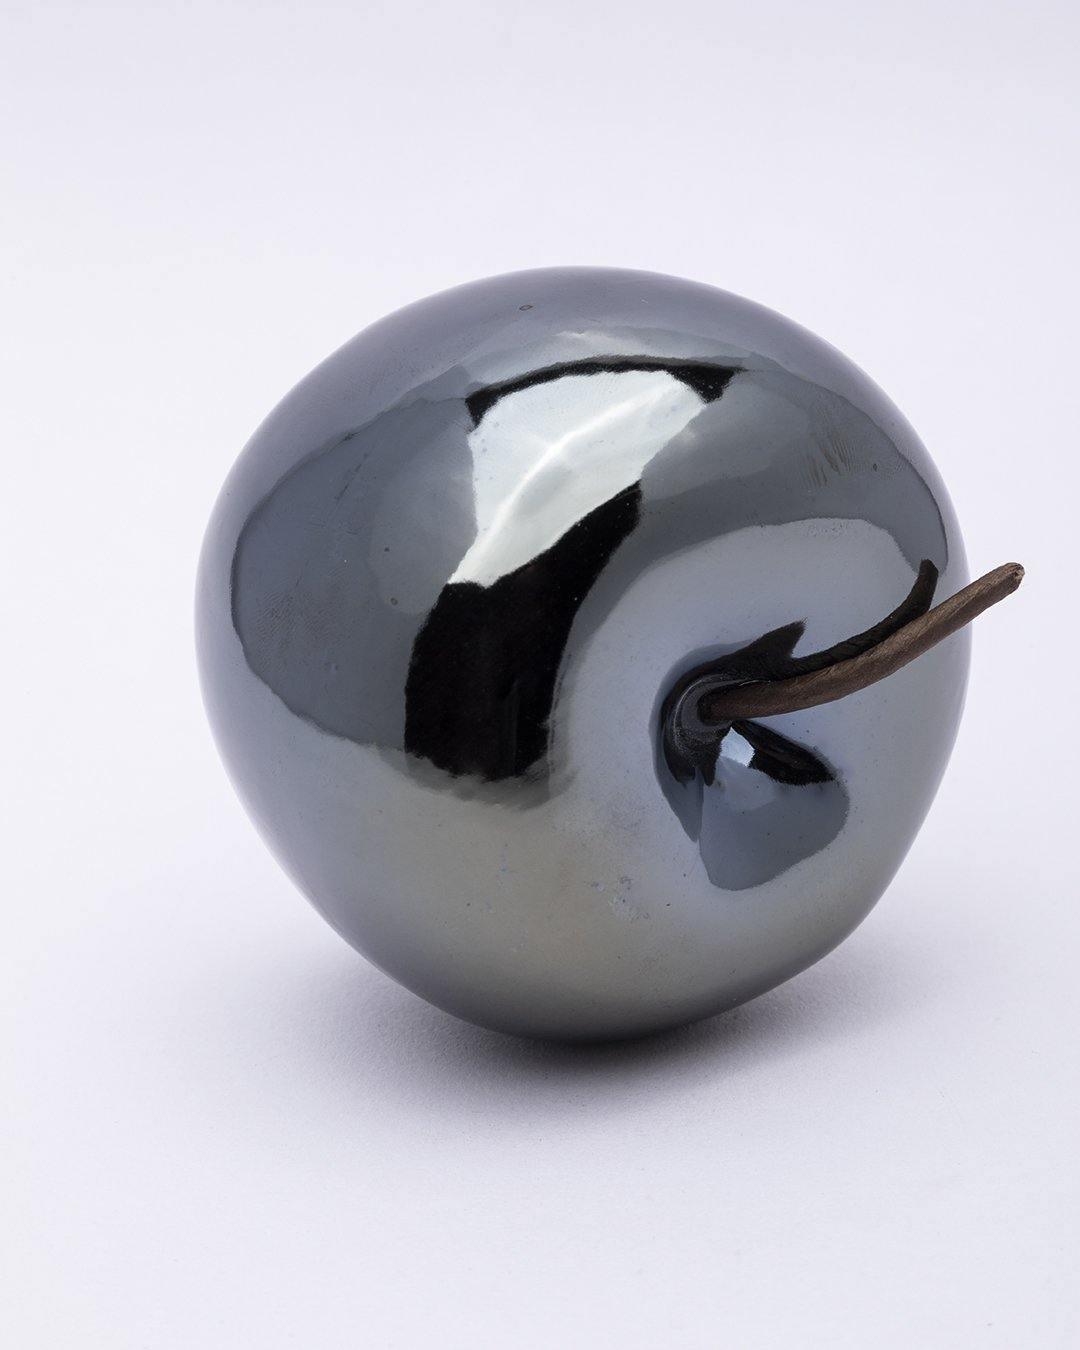 Décor Apple, Decorative Object, Black, Ceramic - MARKET 99